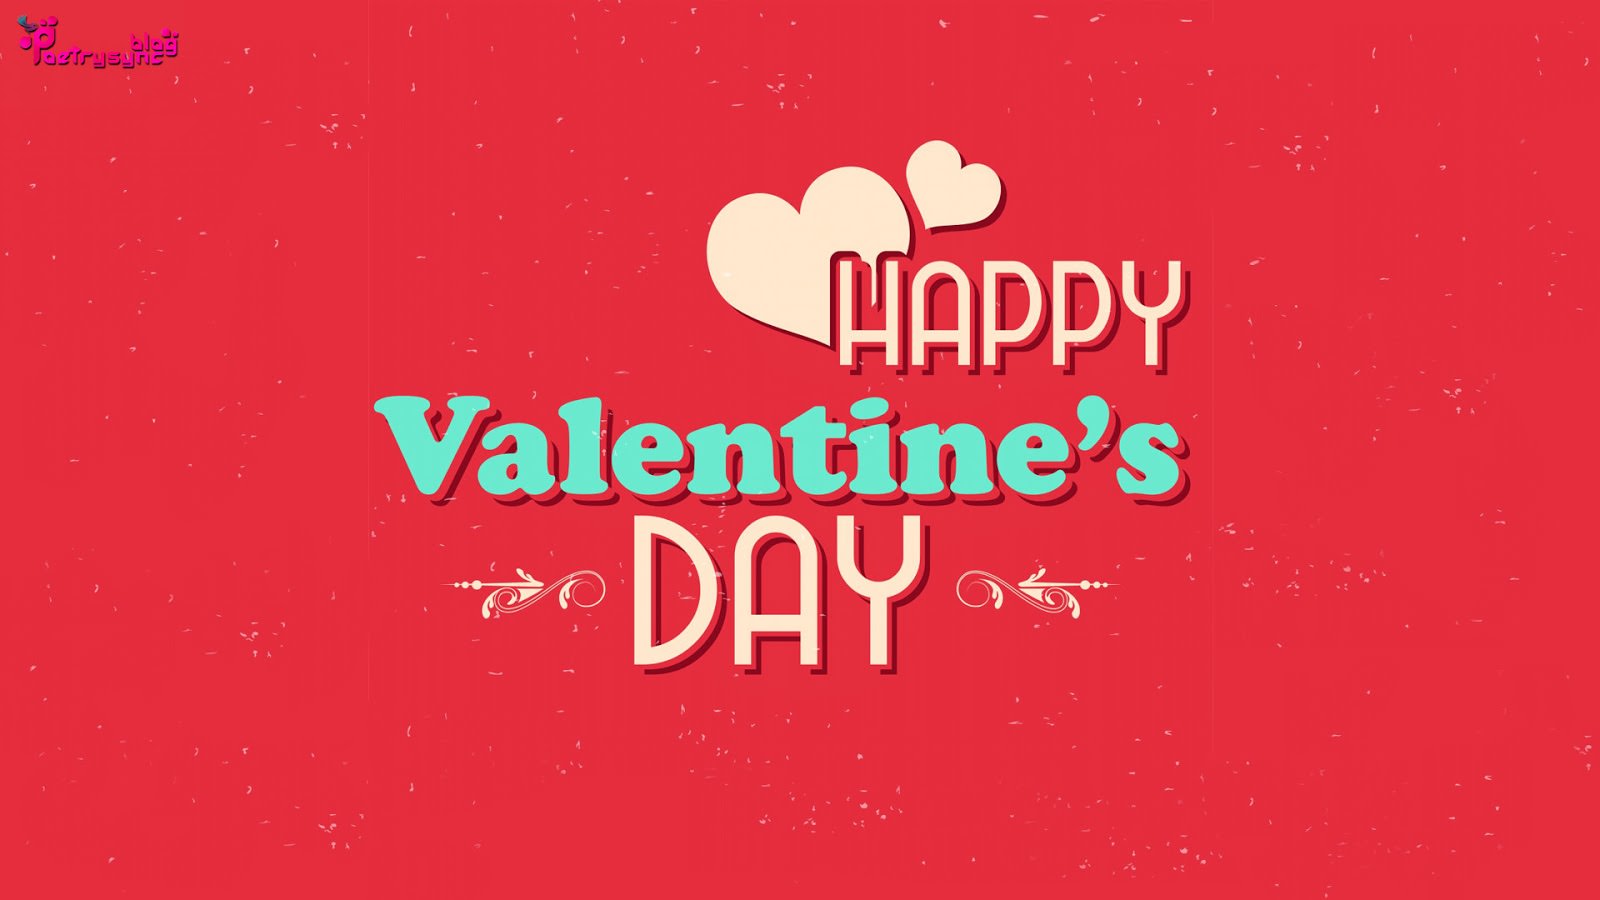 Happy Valentine’s Day Hearts Wallpaper Image